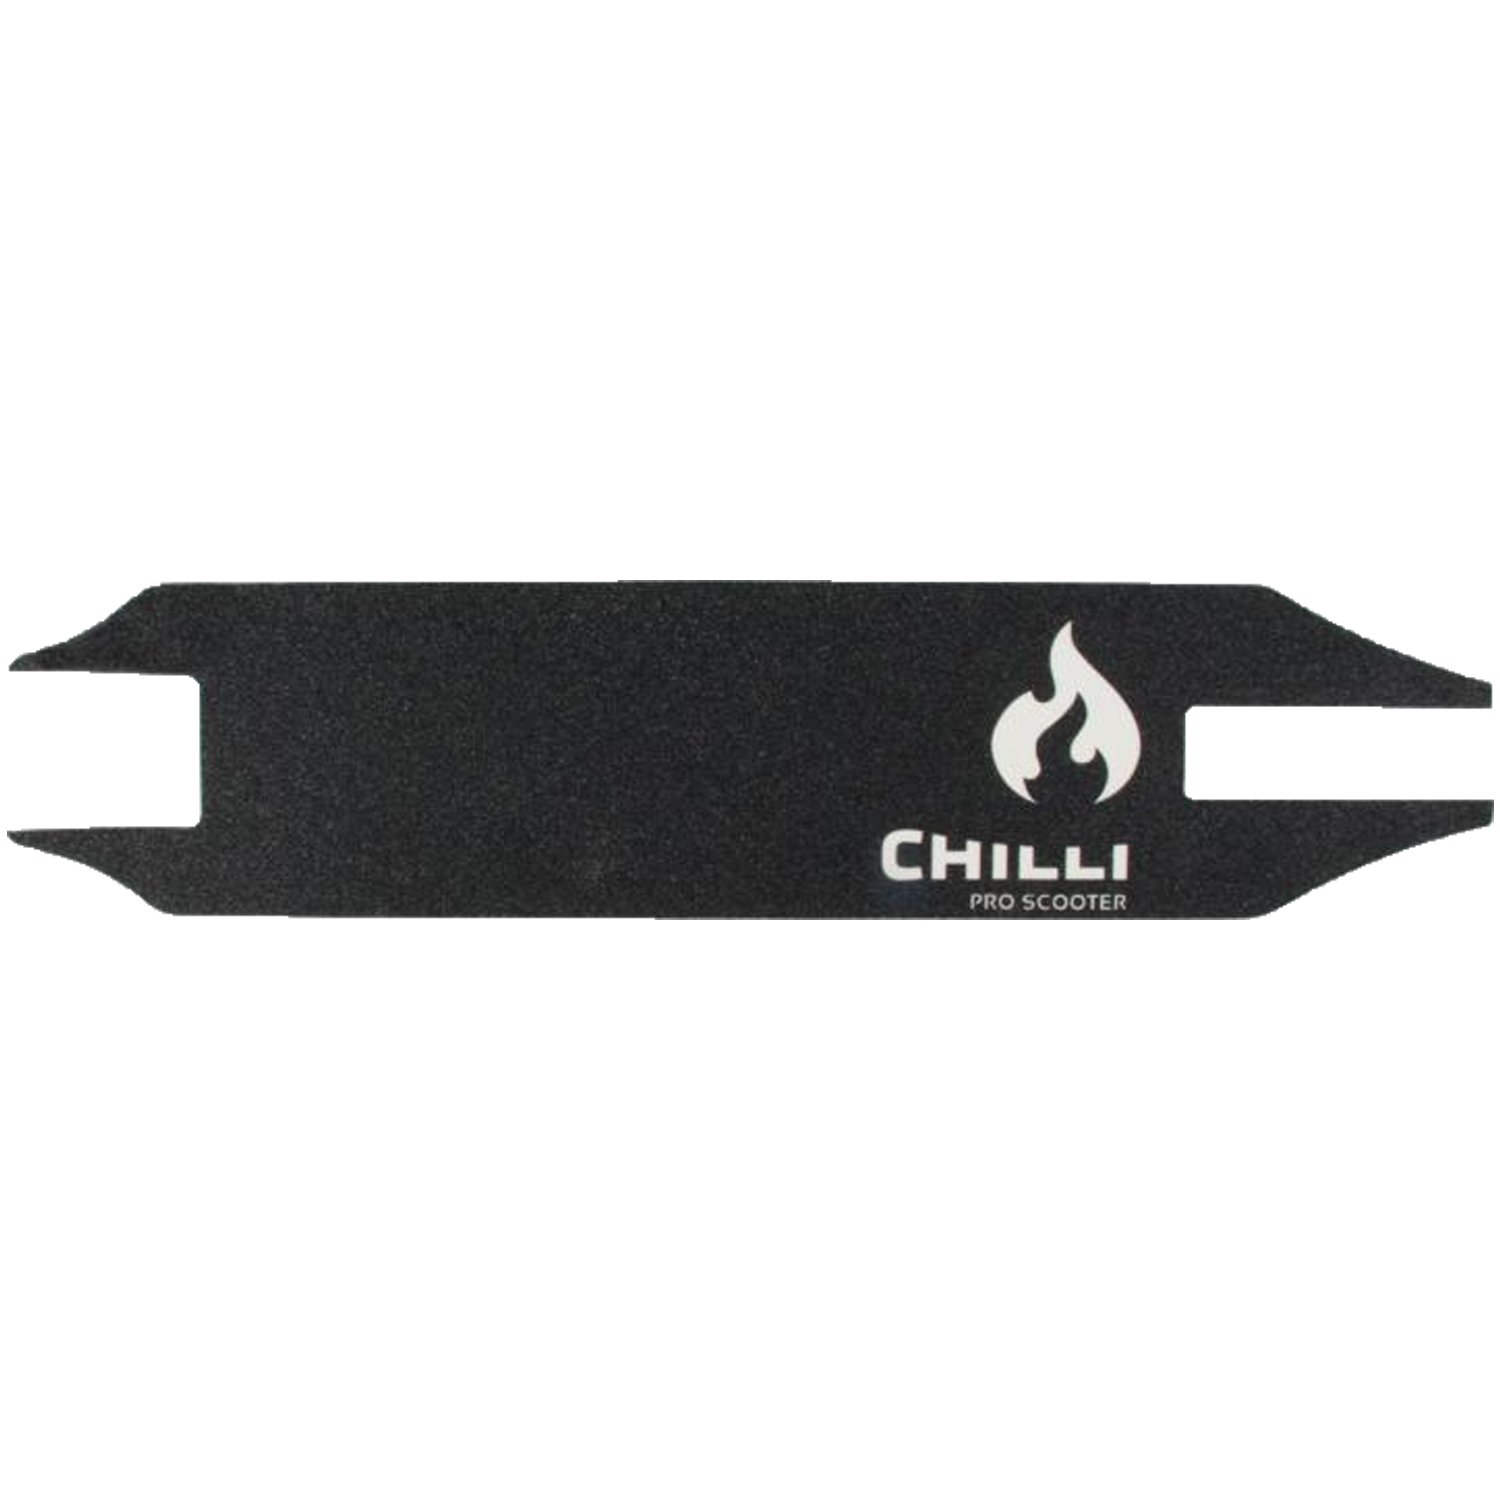 Шкурка Chilli Griptape 5000,  для самоката, черный, 2021, 305-1 шкурка stg для платформы самоката 15 55 см серая х105159